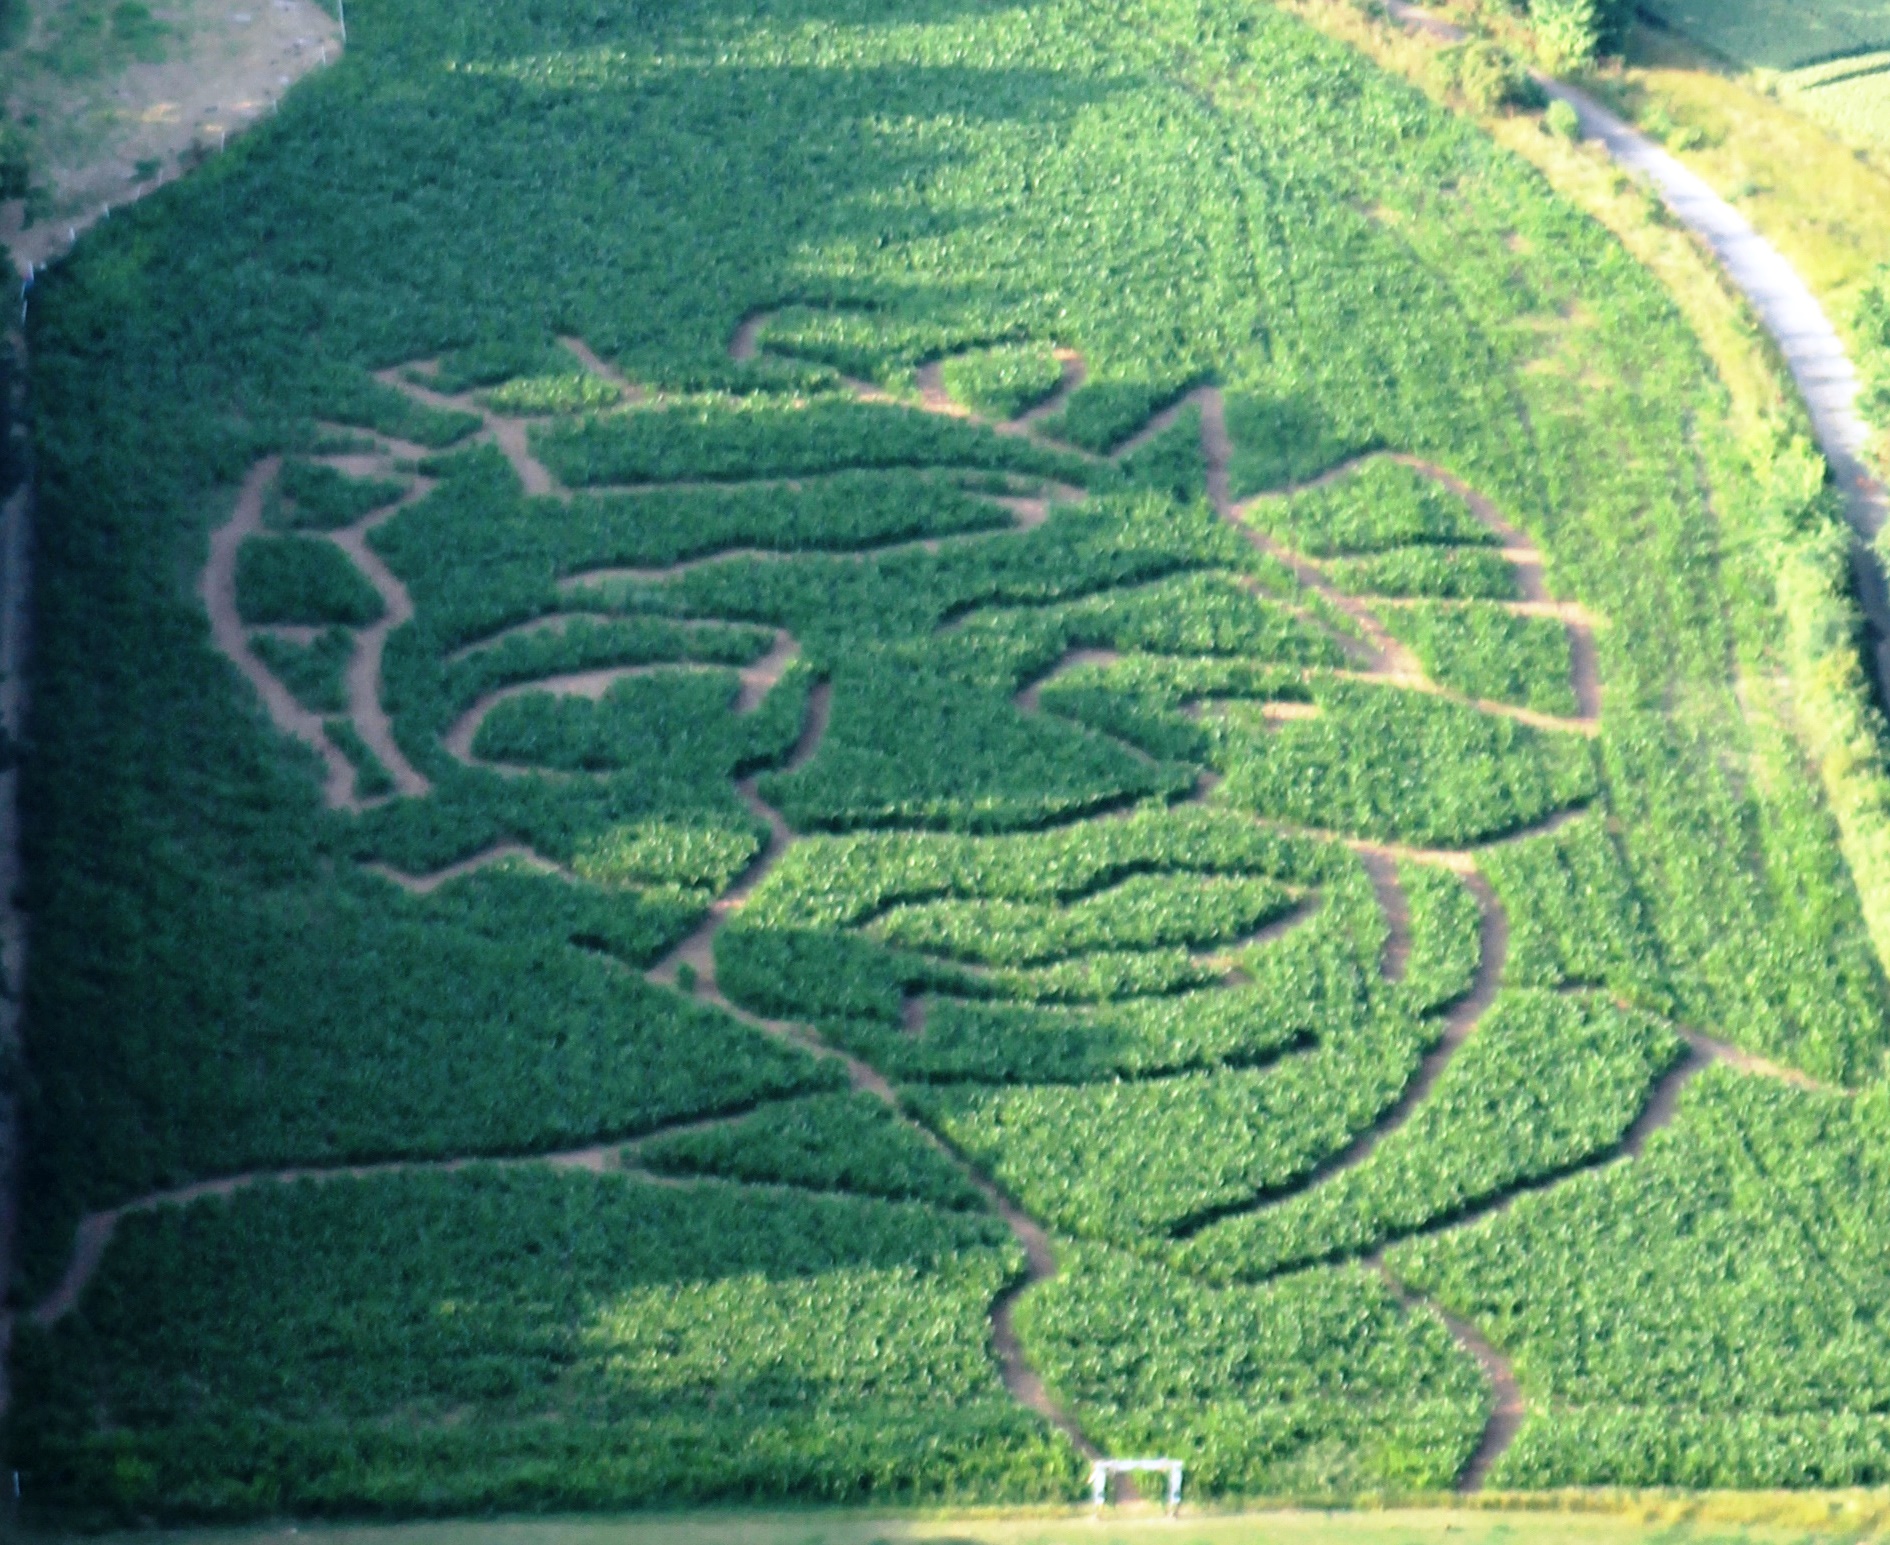 Mandela Maze, courtesy of TG Aviation